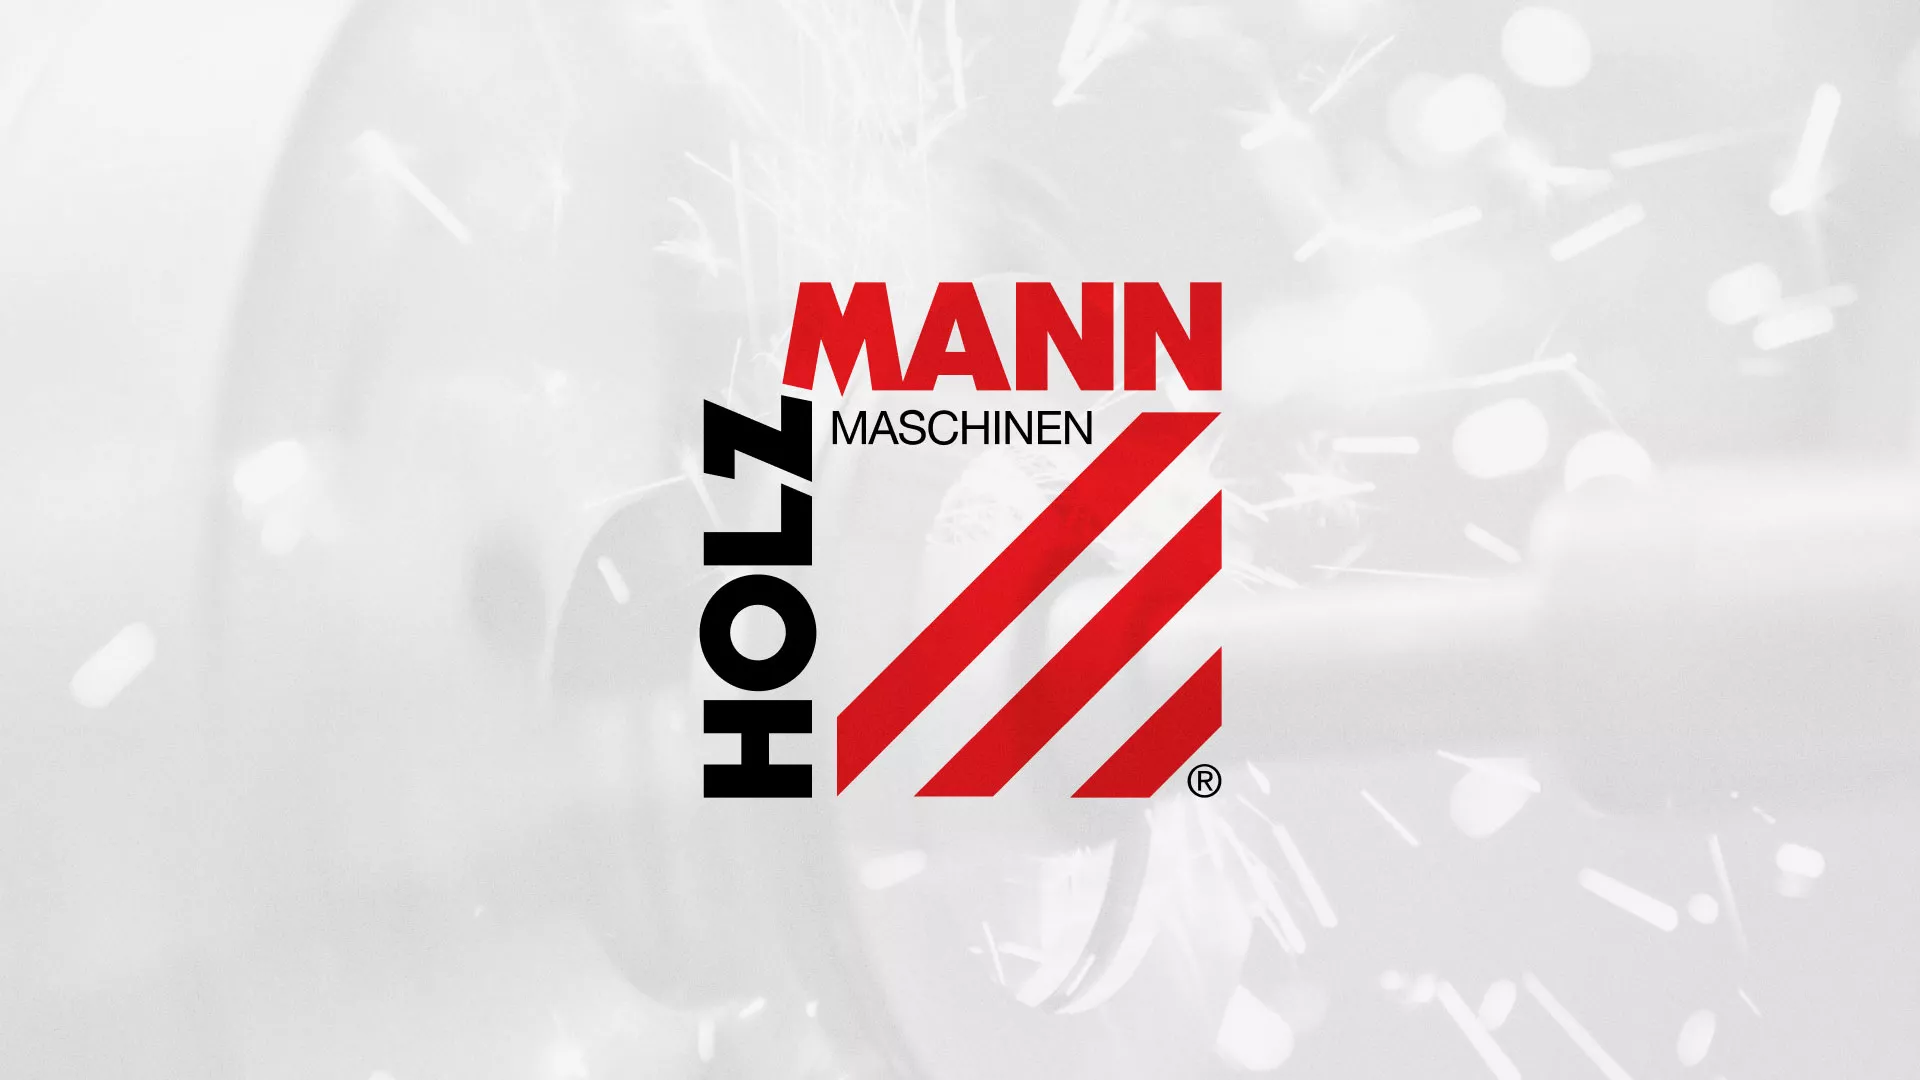 Создание сайта компании «HOLZMANN Maschinen GmbH» в Шенкурске